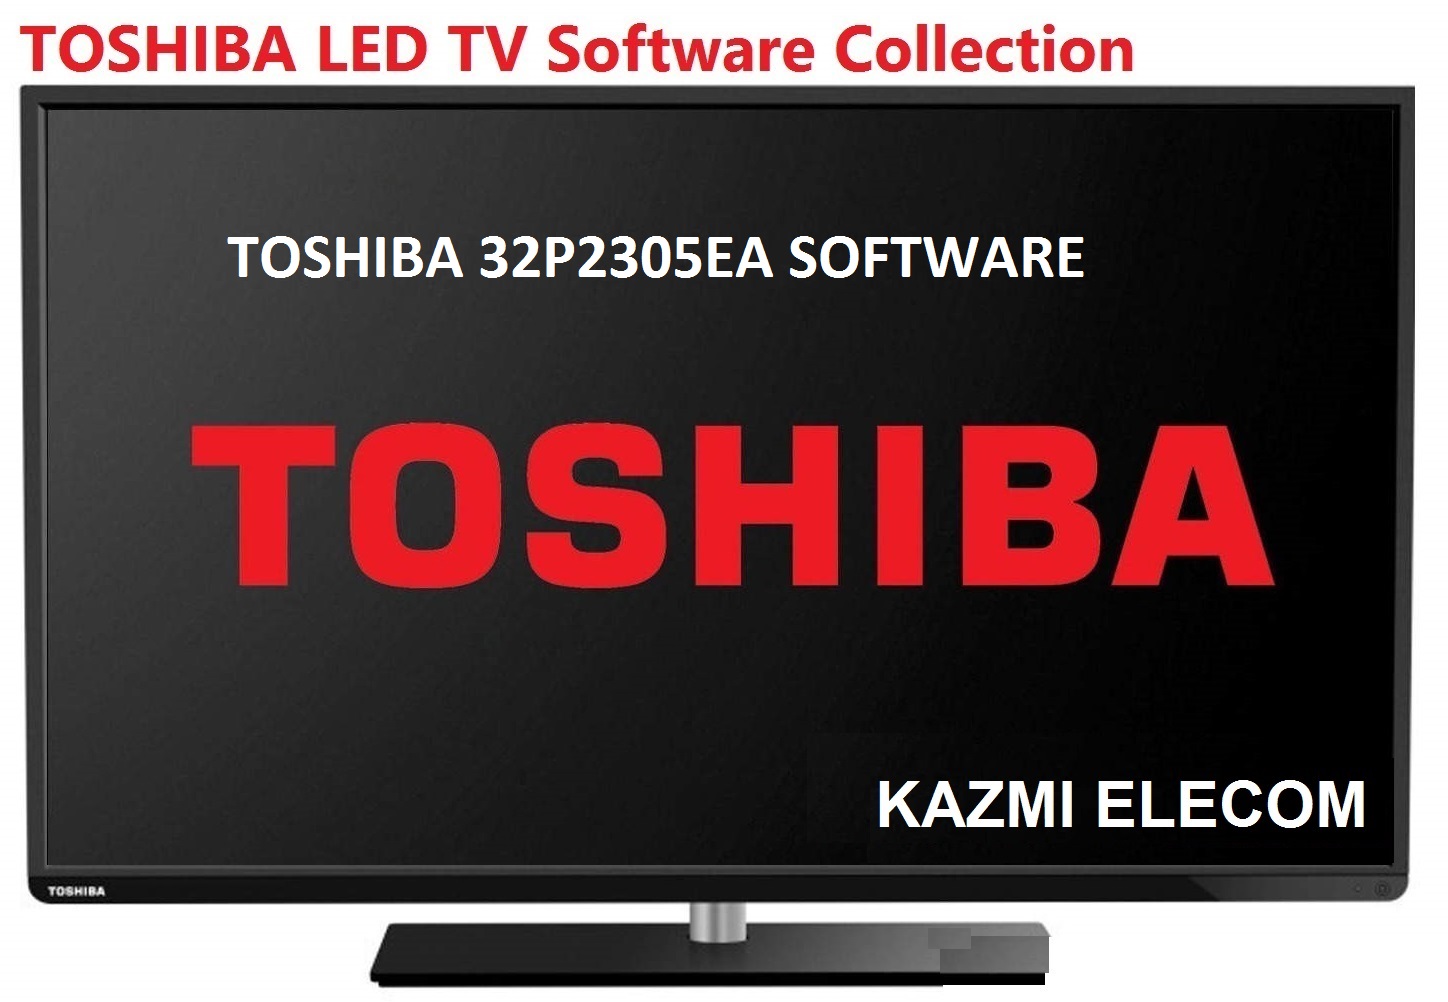 Toshiba 32P2305Ea